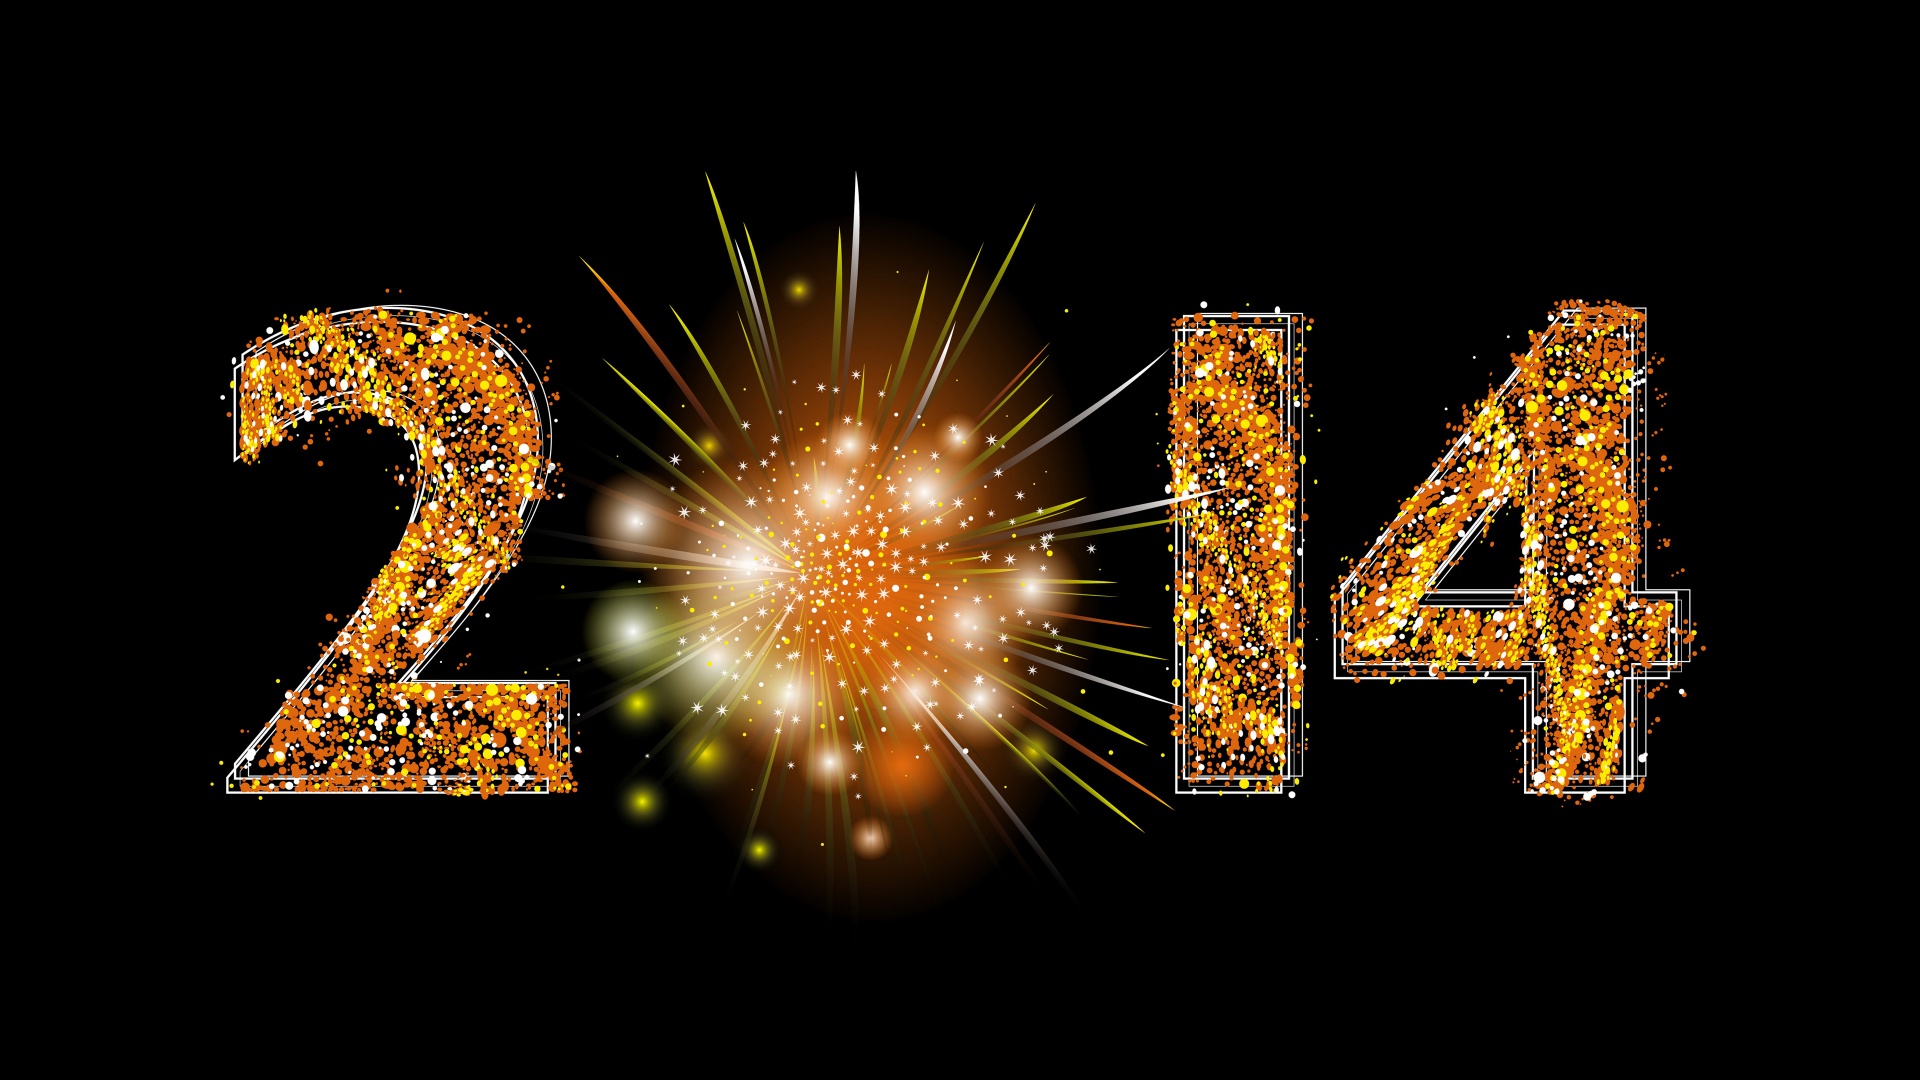 Happy New Year 2014 Fireworks